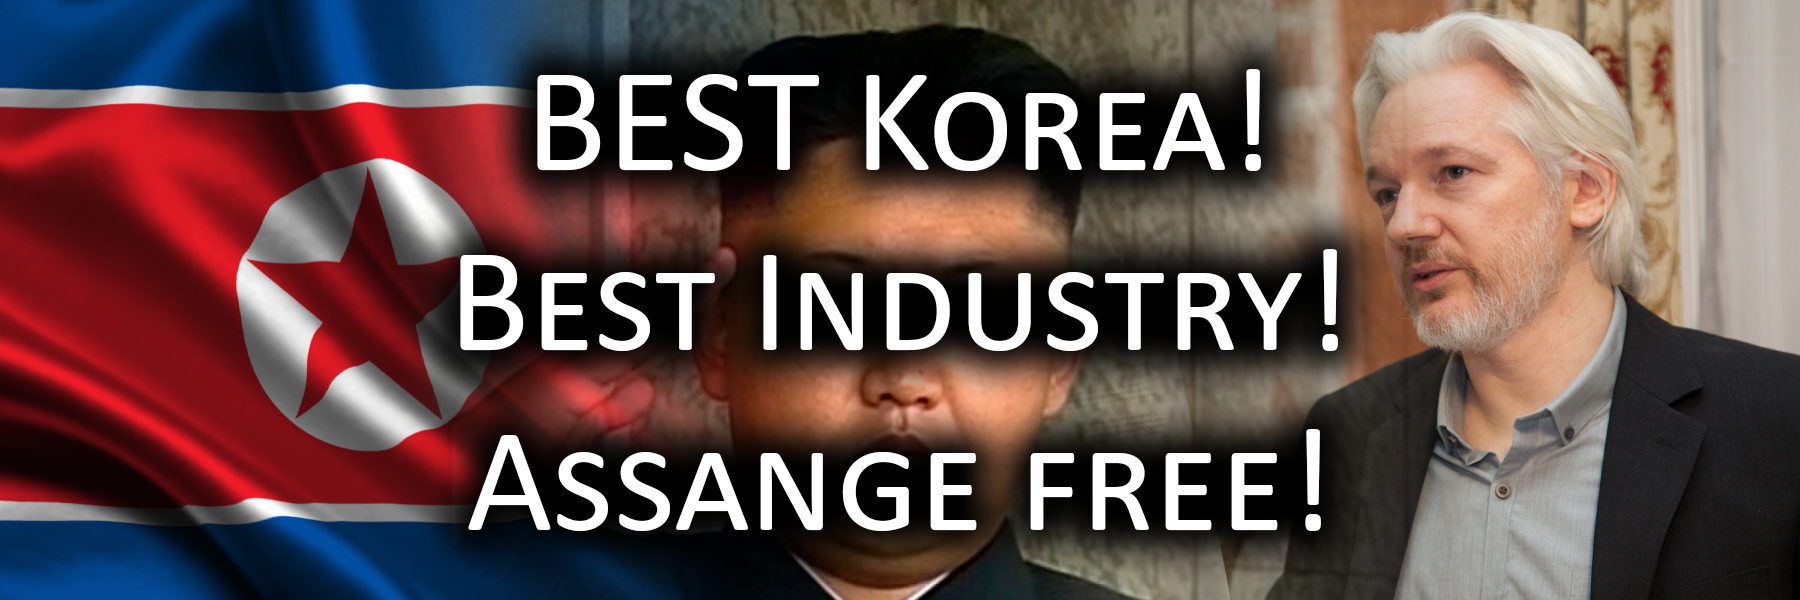 BEST Korea! Best Industry! Assange Free!